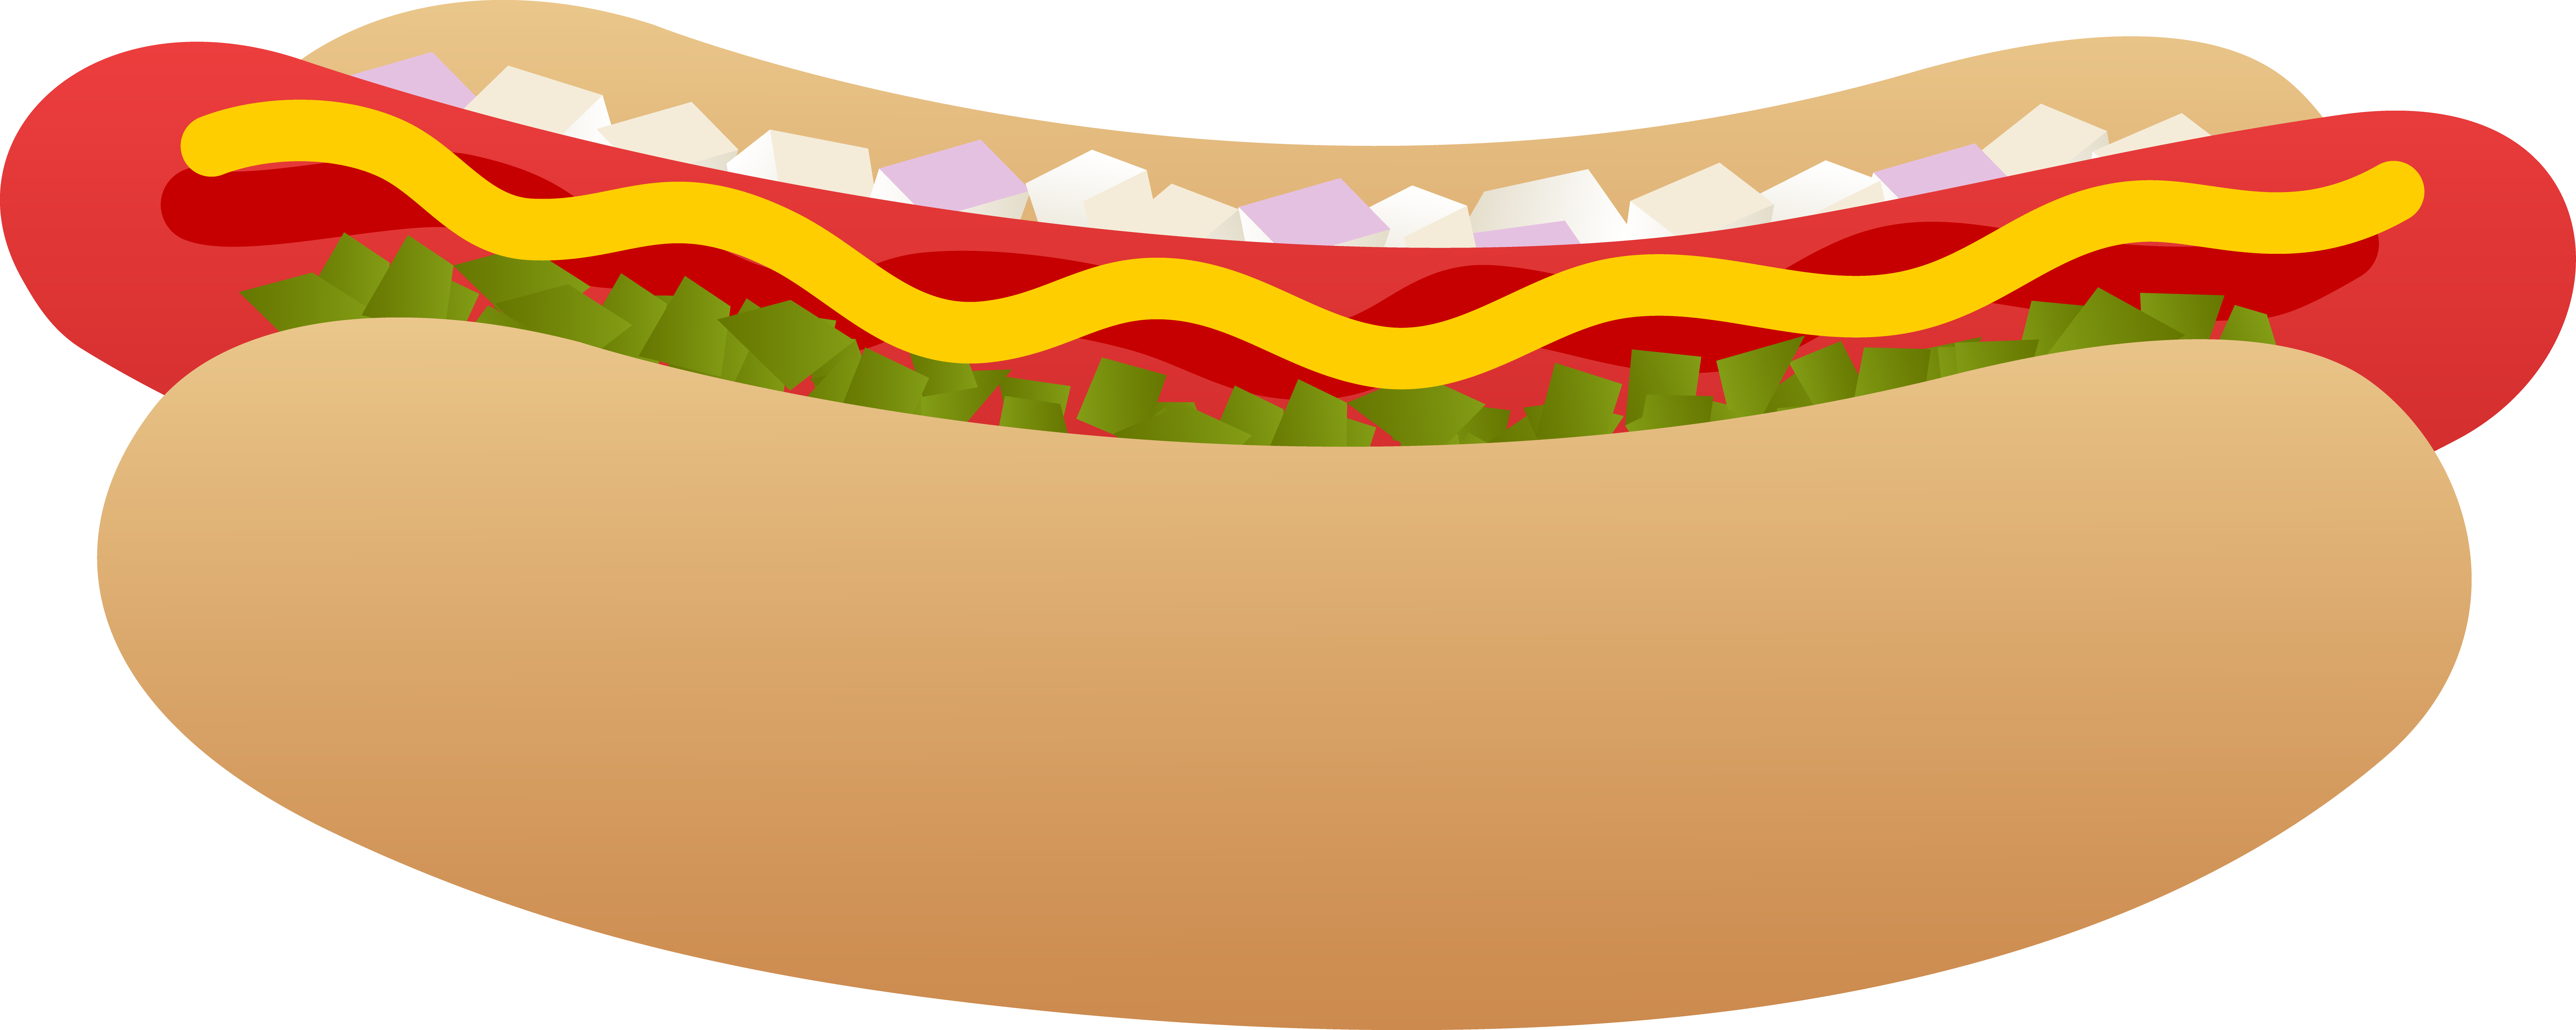 hotdog and hamburger clipart